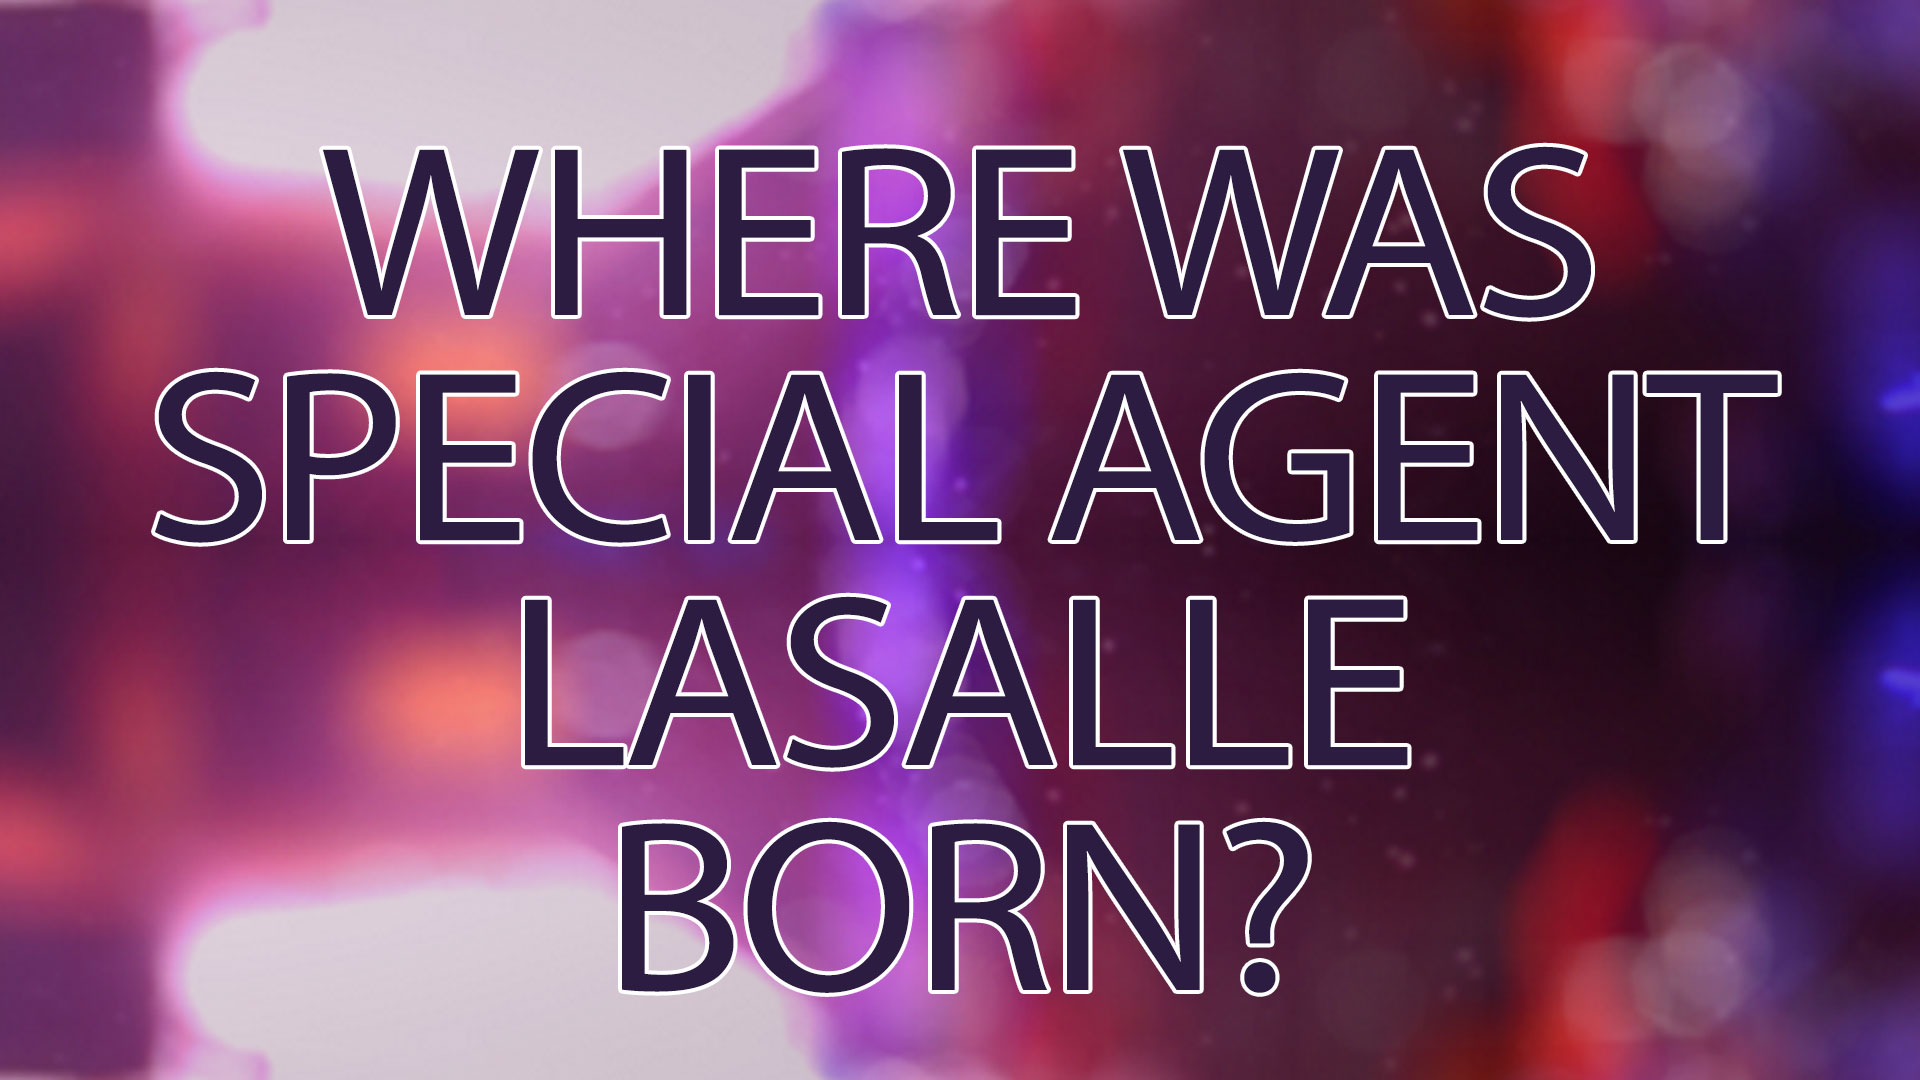 Where was Special Agent Lasalle Born?